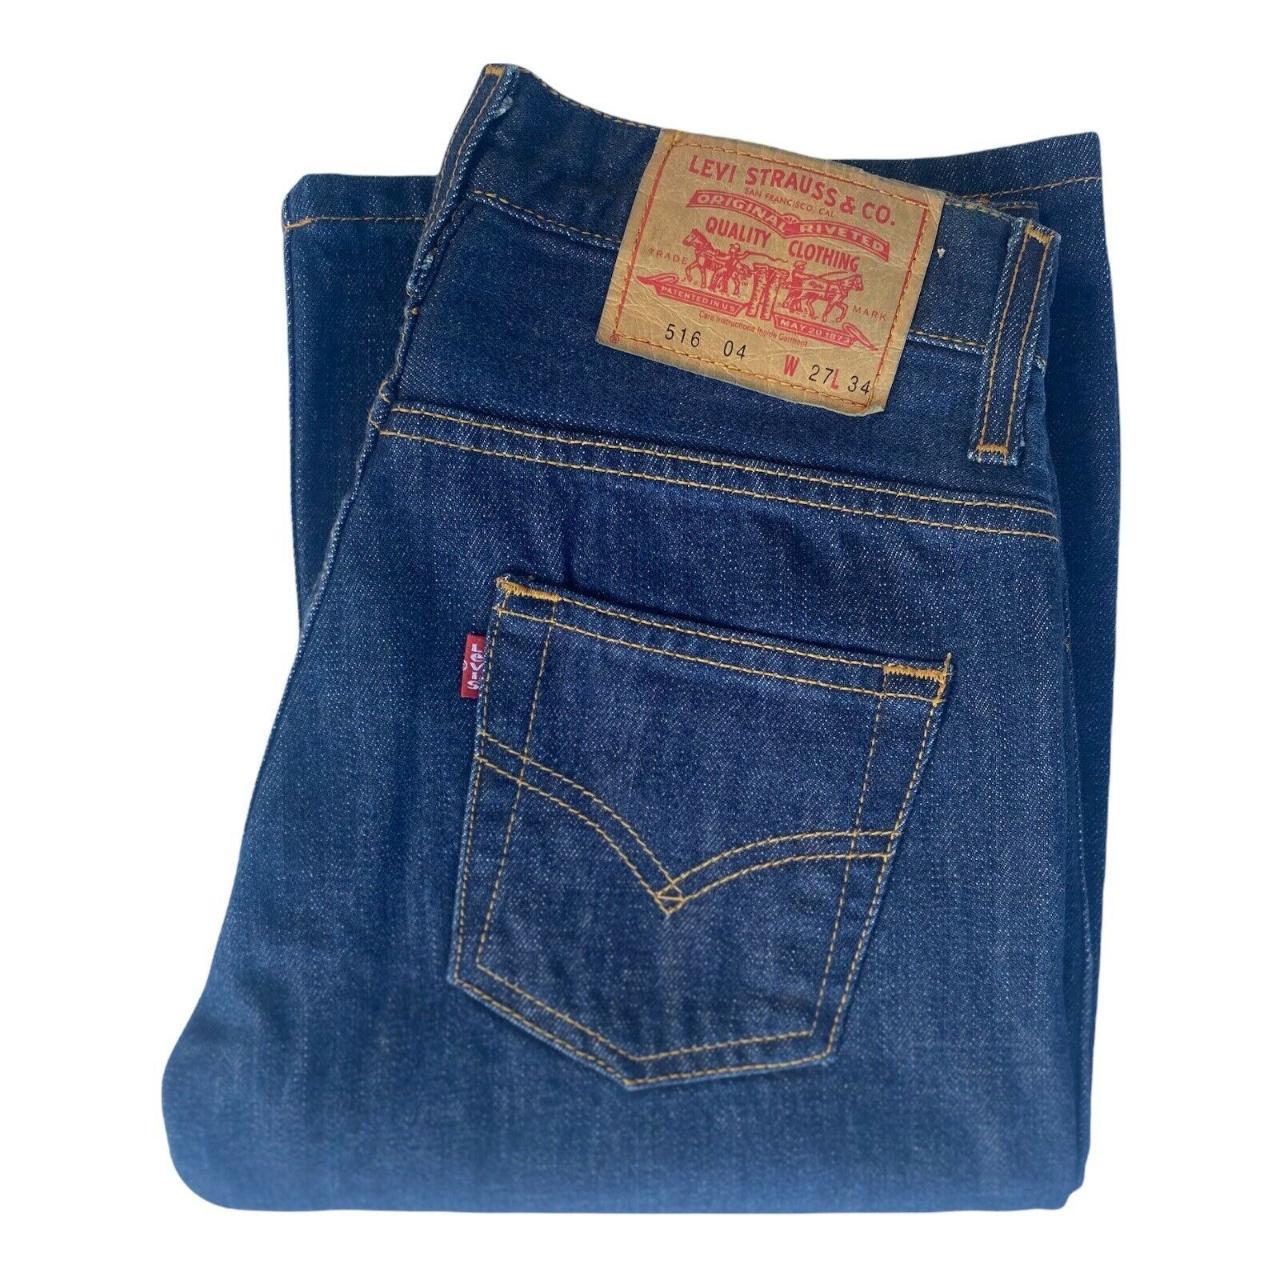 Rare Levi's 516 flared jeans in a dark blue colour.... - Depop